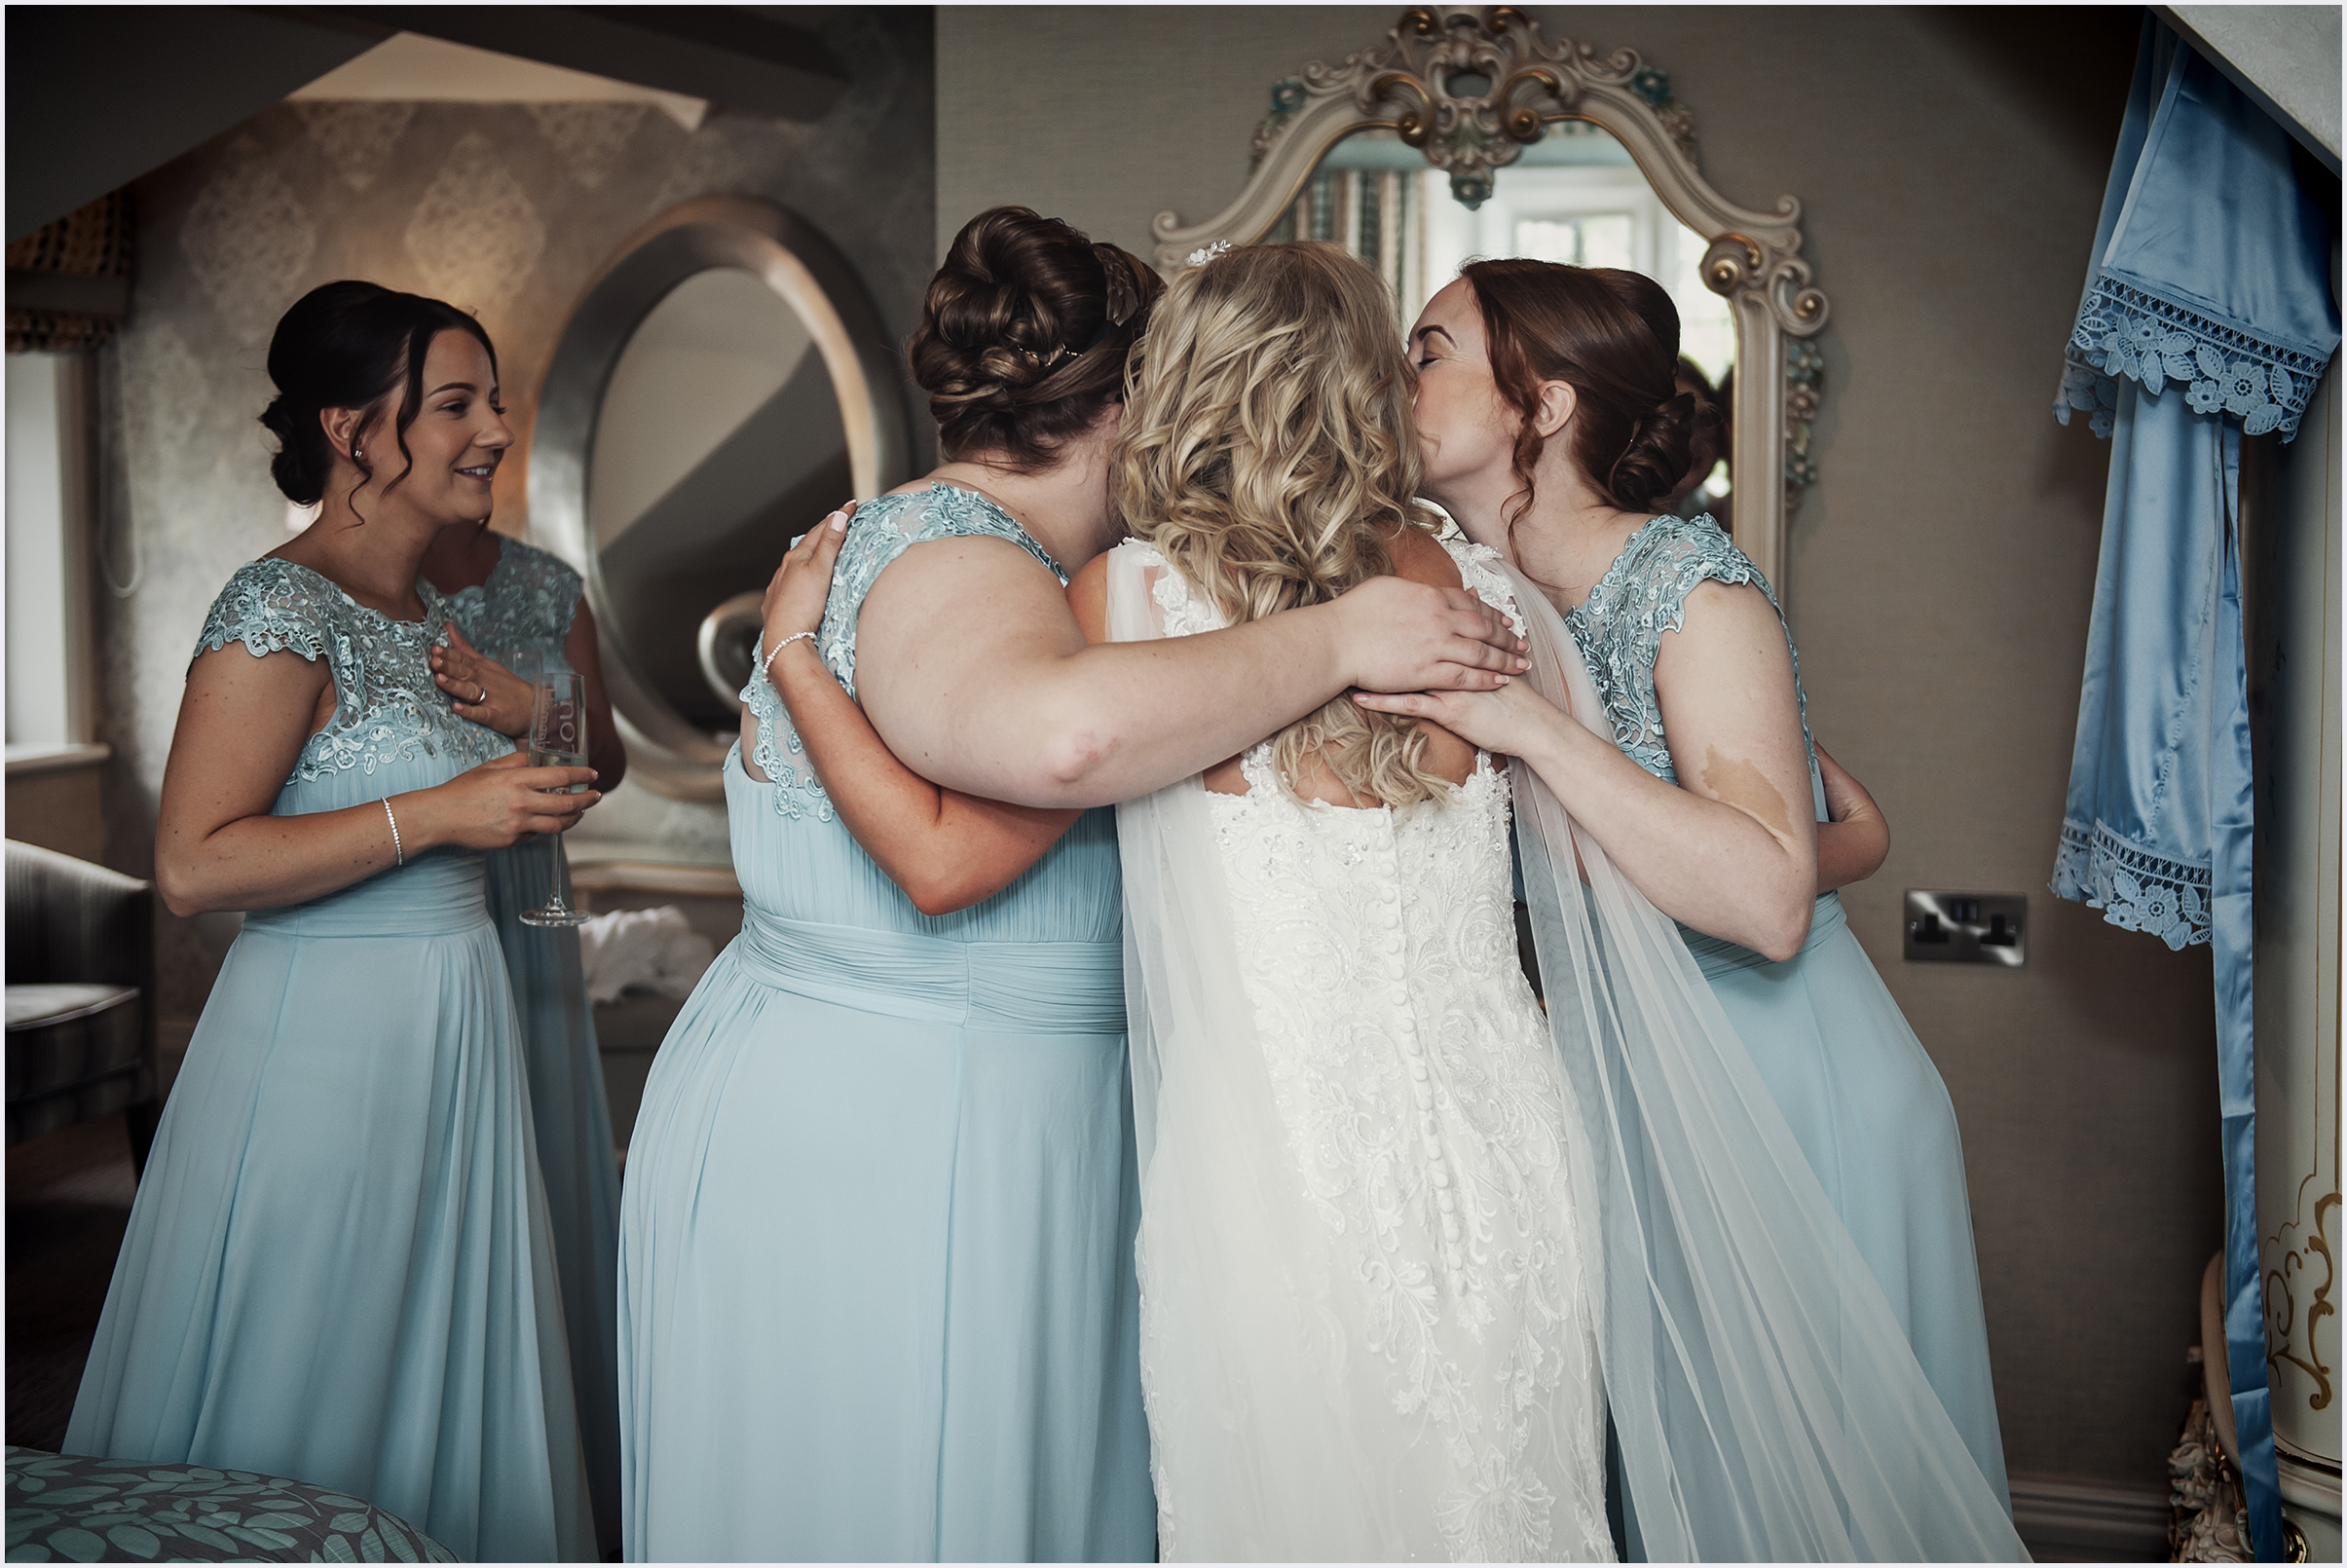 Bridesmaids embrace the bride before her wedding ceremony.  Image captured by Cheshire wedding photographer Helena Jayne Photography